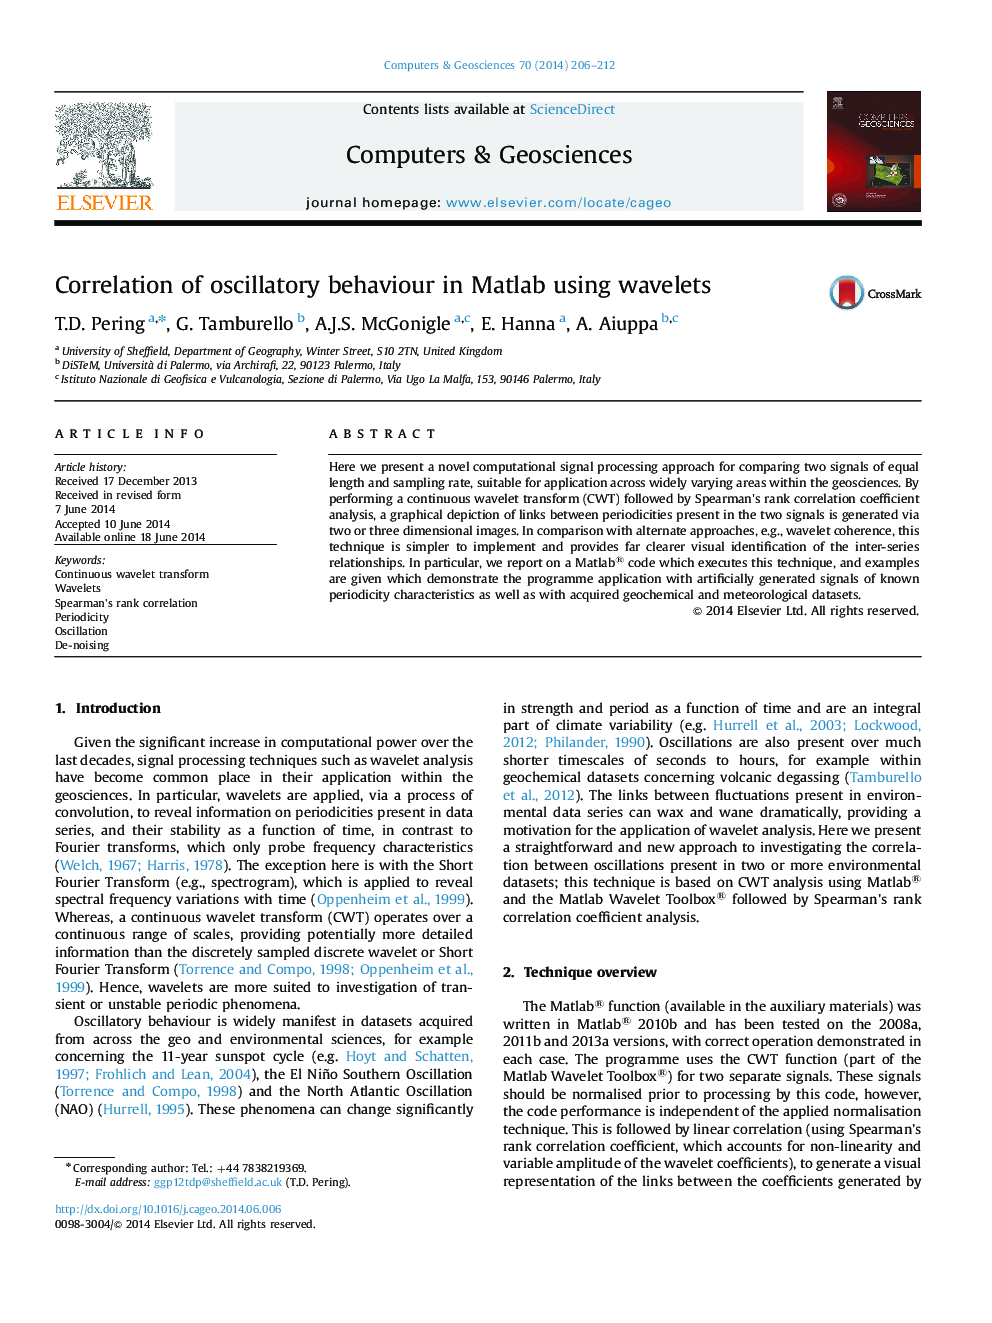 Correlation of oscillatory behaviour in Matlab using wavelets